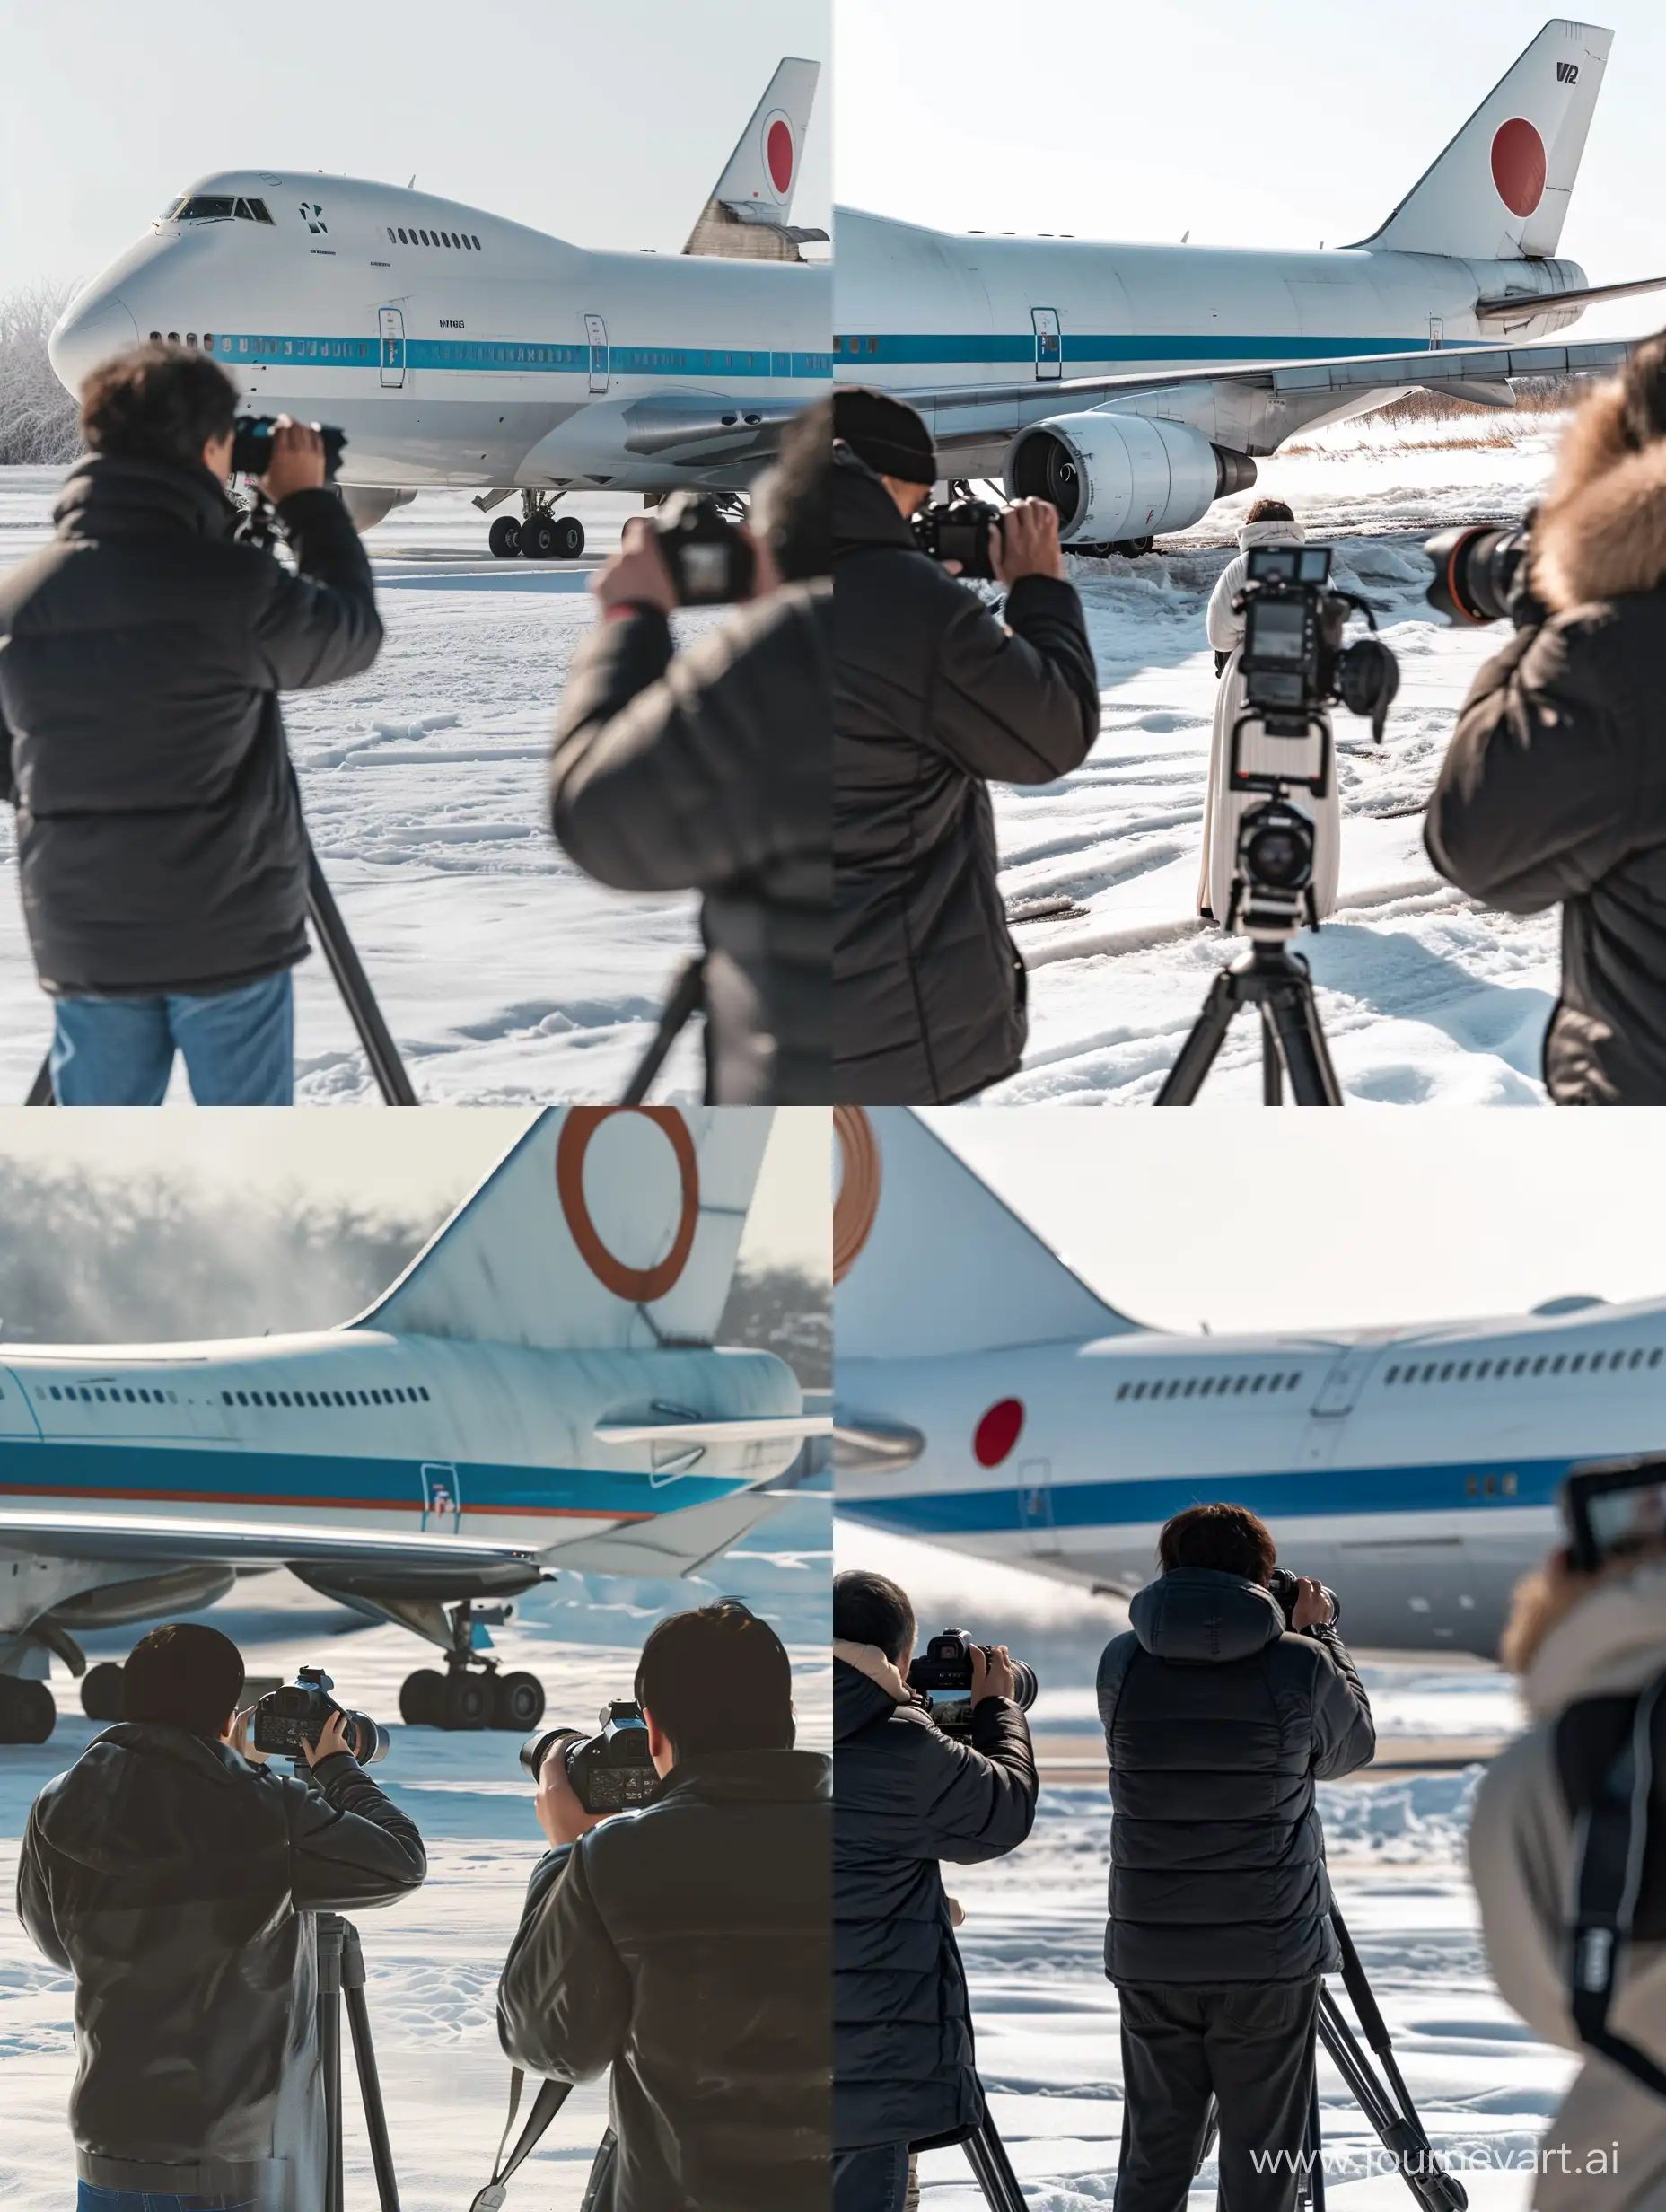 Aviation-Enthusiasts-Capturing-Stunning-Shots-of-Boeing-747-in-Winter-Wonderland